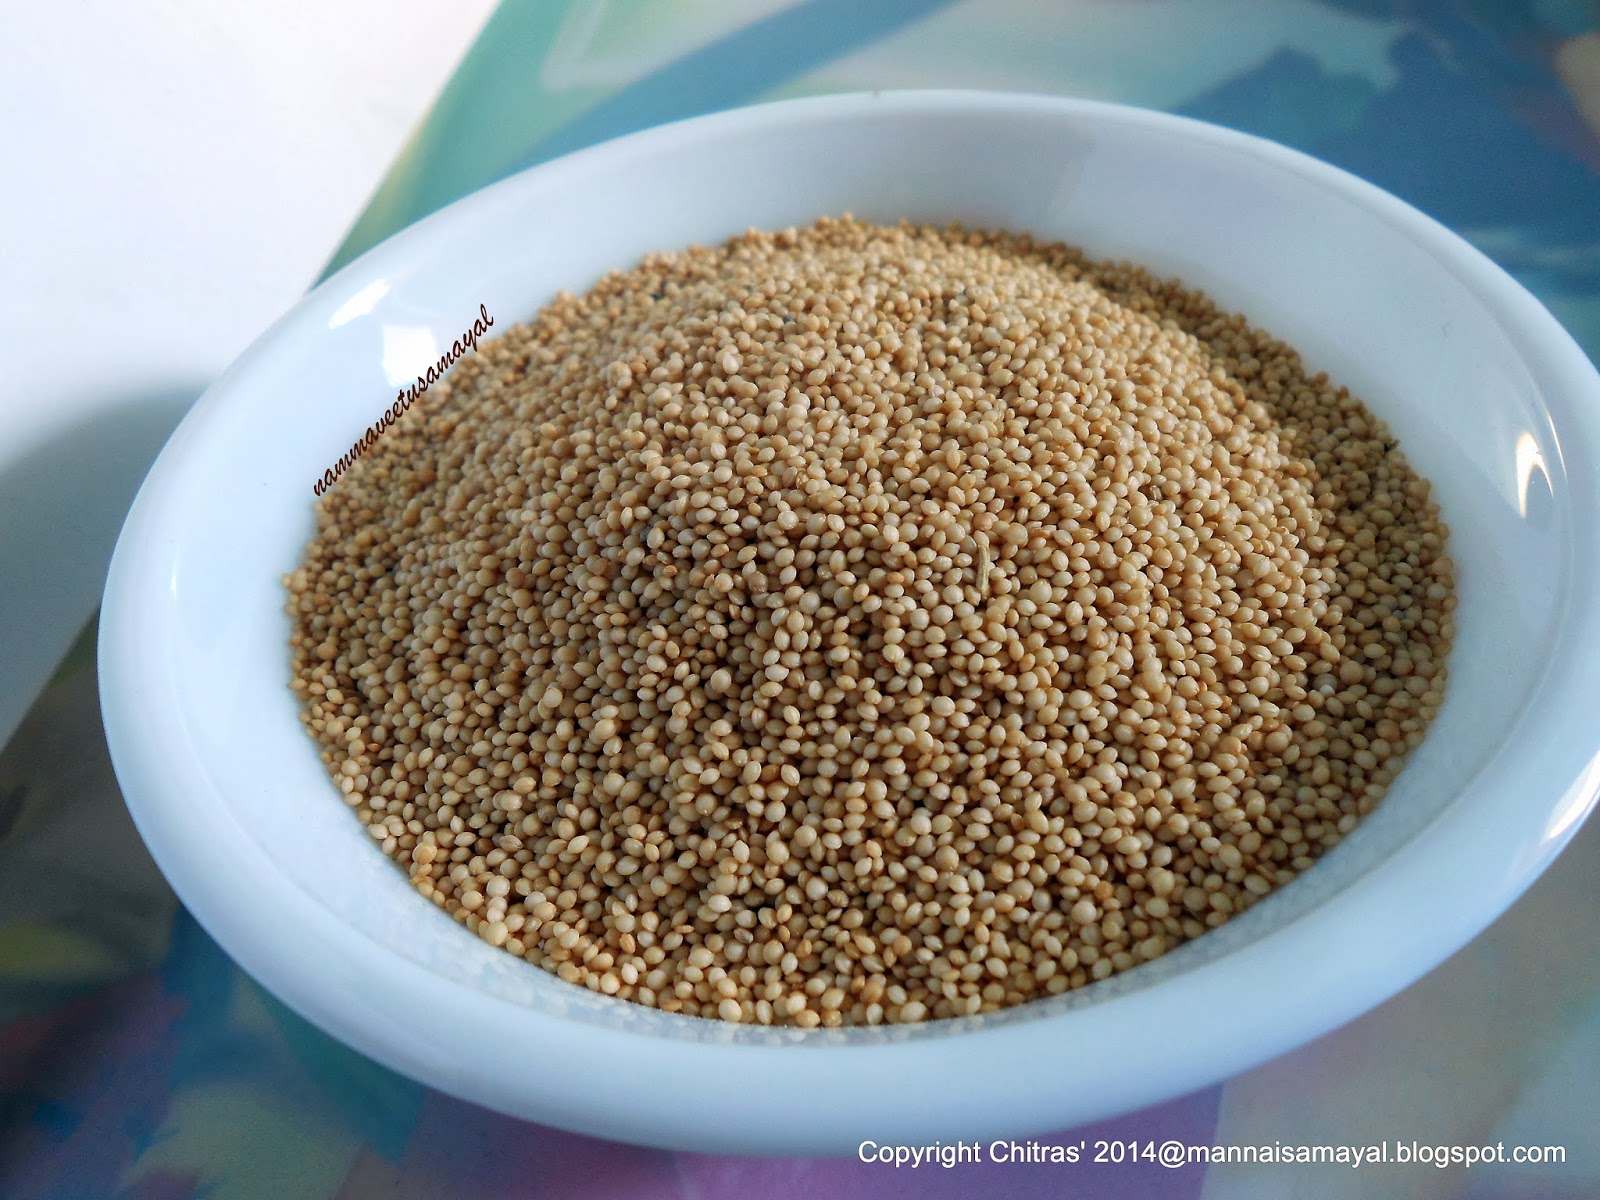 kalakkalsamayal: Amaranth Seeds Payasam 1